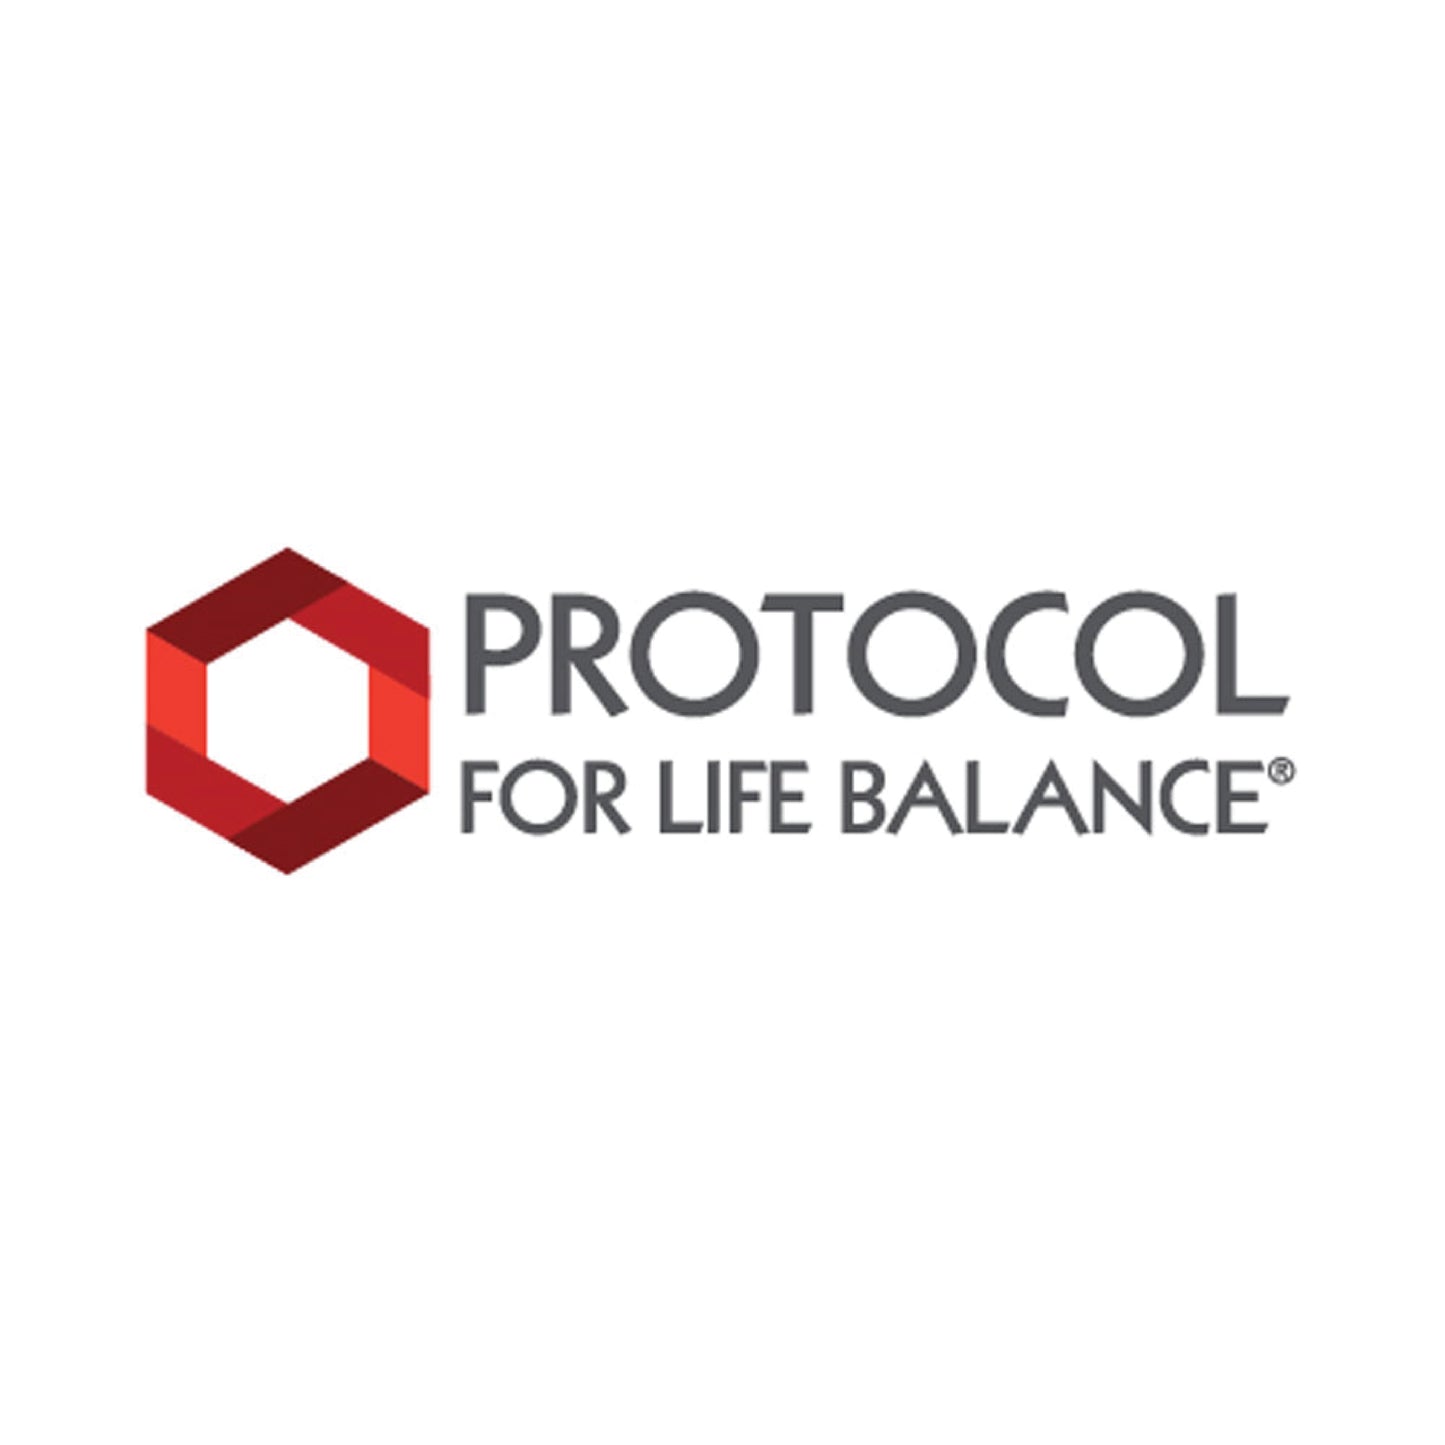 Protocol for Life Balance, Selenium, 200 mcg, 90 Veg Capsules